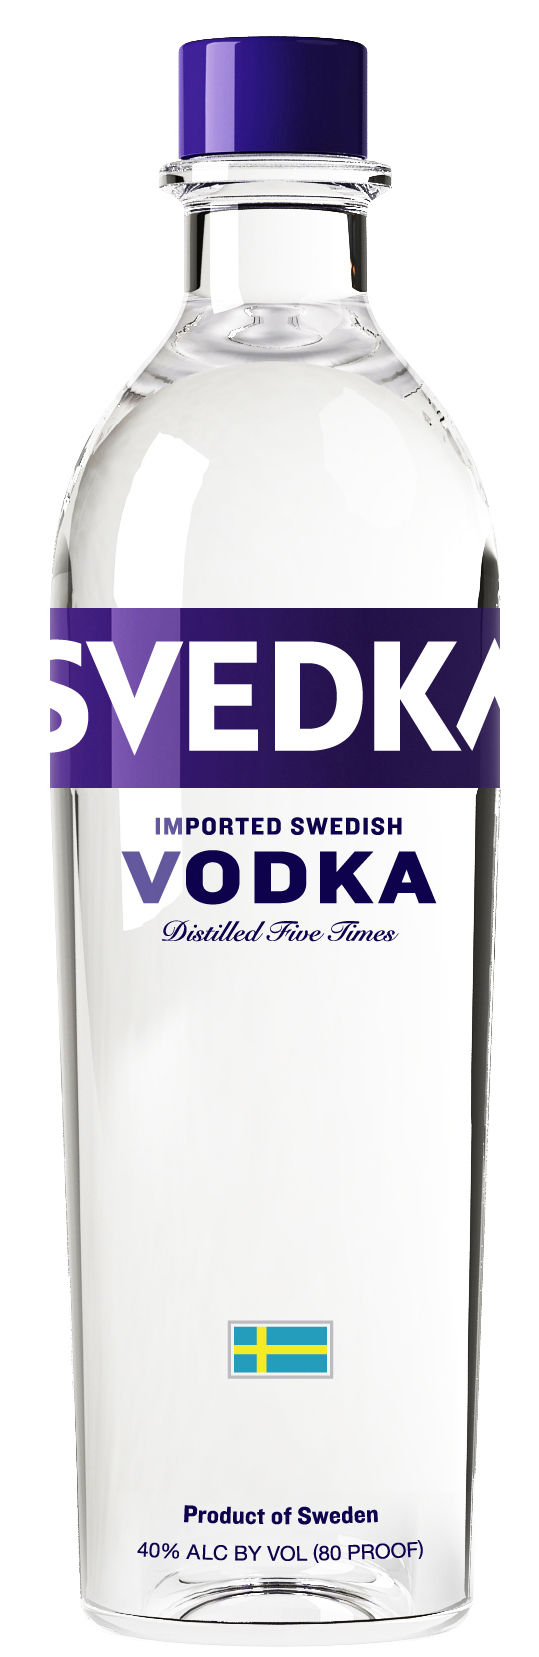 svedka_vodka_new_botle.jpg